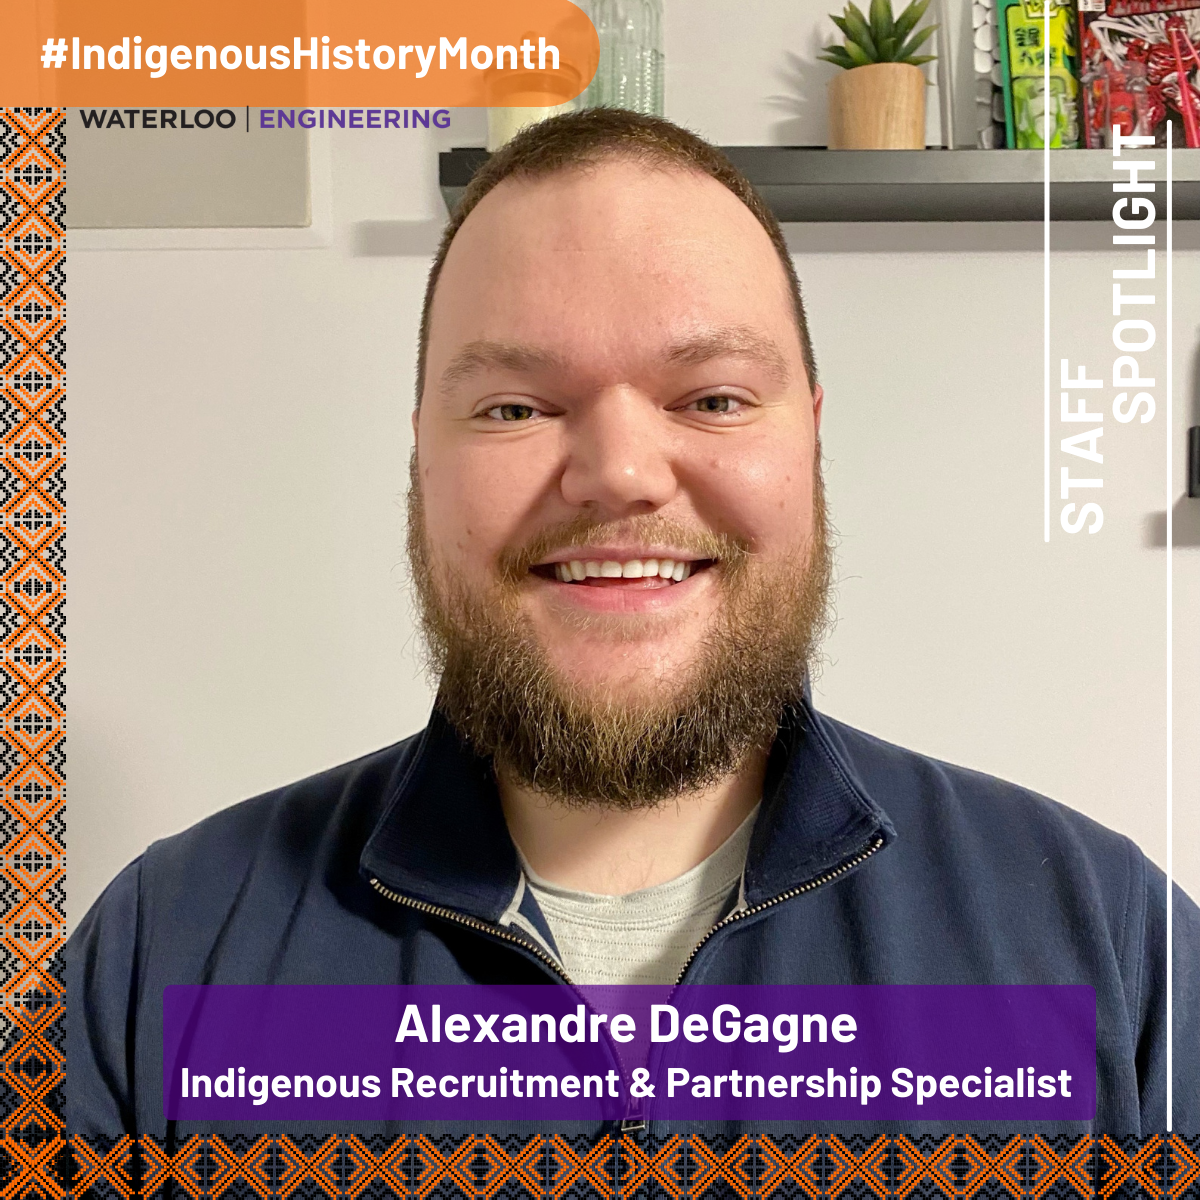 Alexandre DeGagne, Indigenous Recruitment and Partnership Specialist